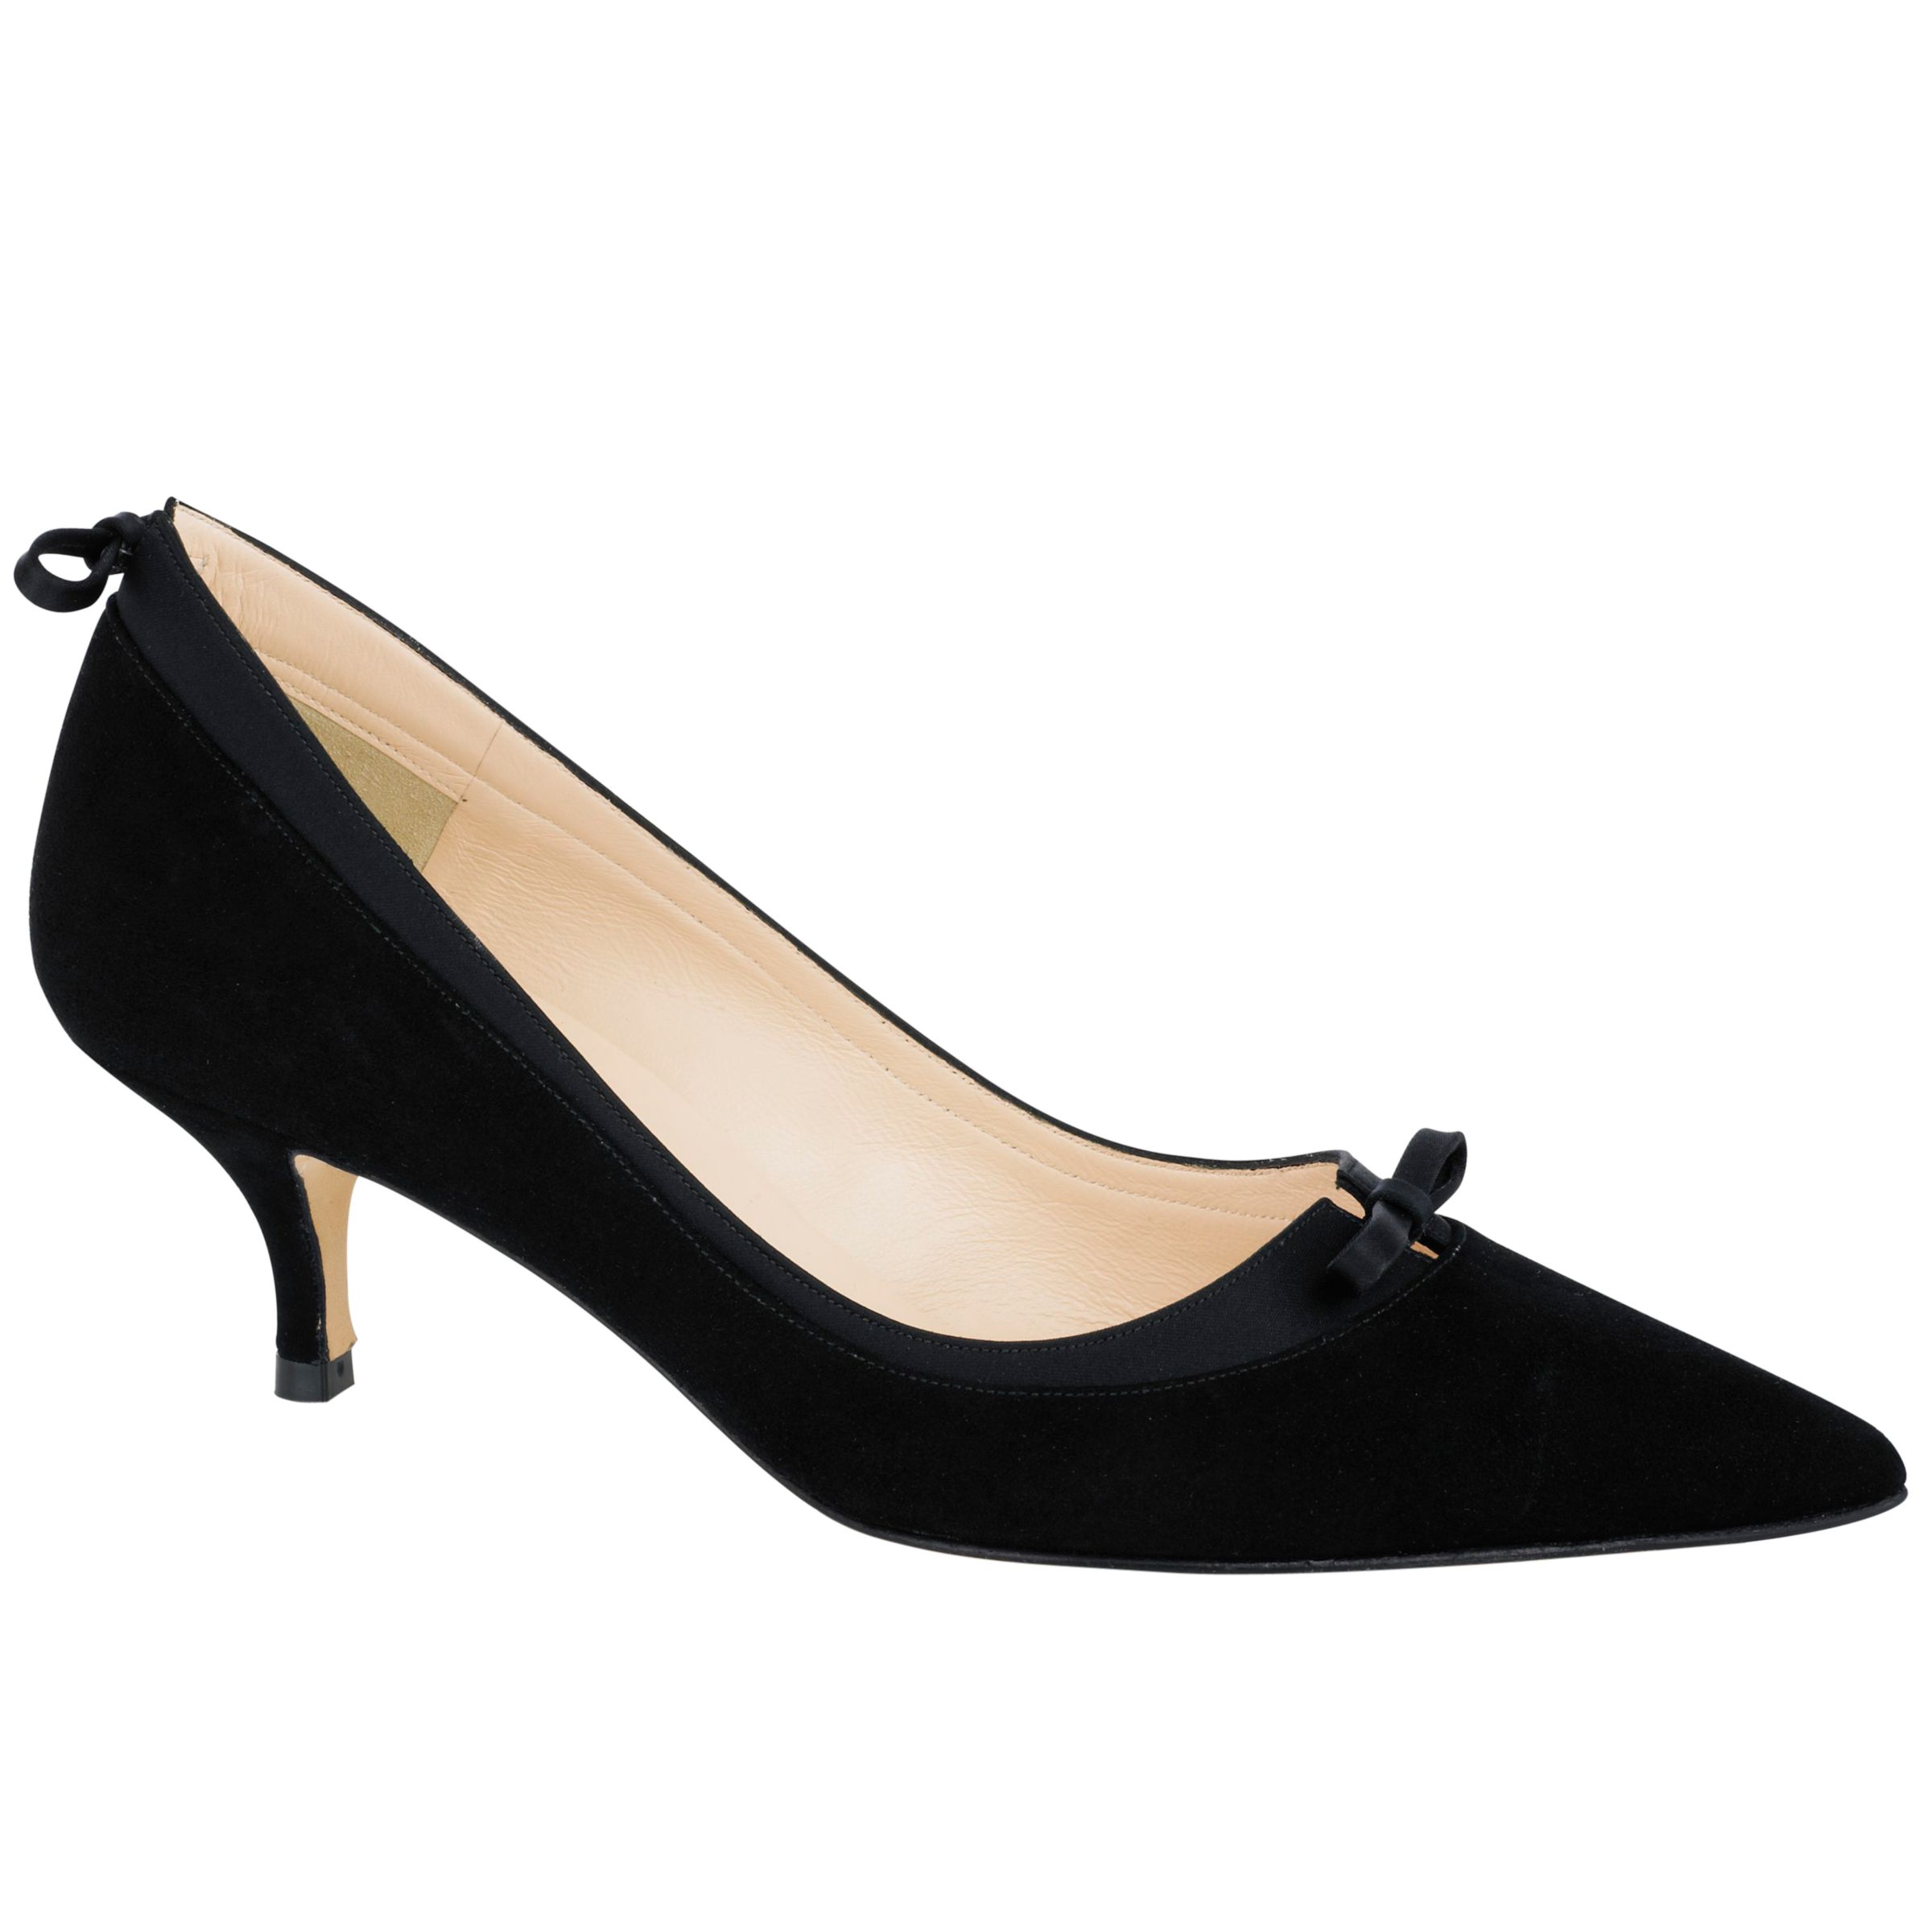 L.K.Bennett Phoebe Suede Court Shoes, Black at JohnLewis